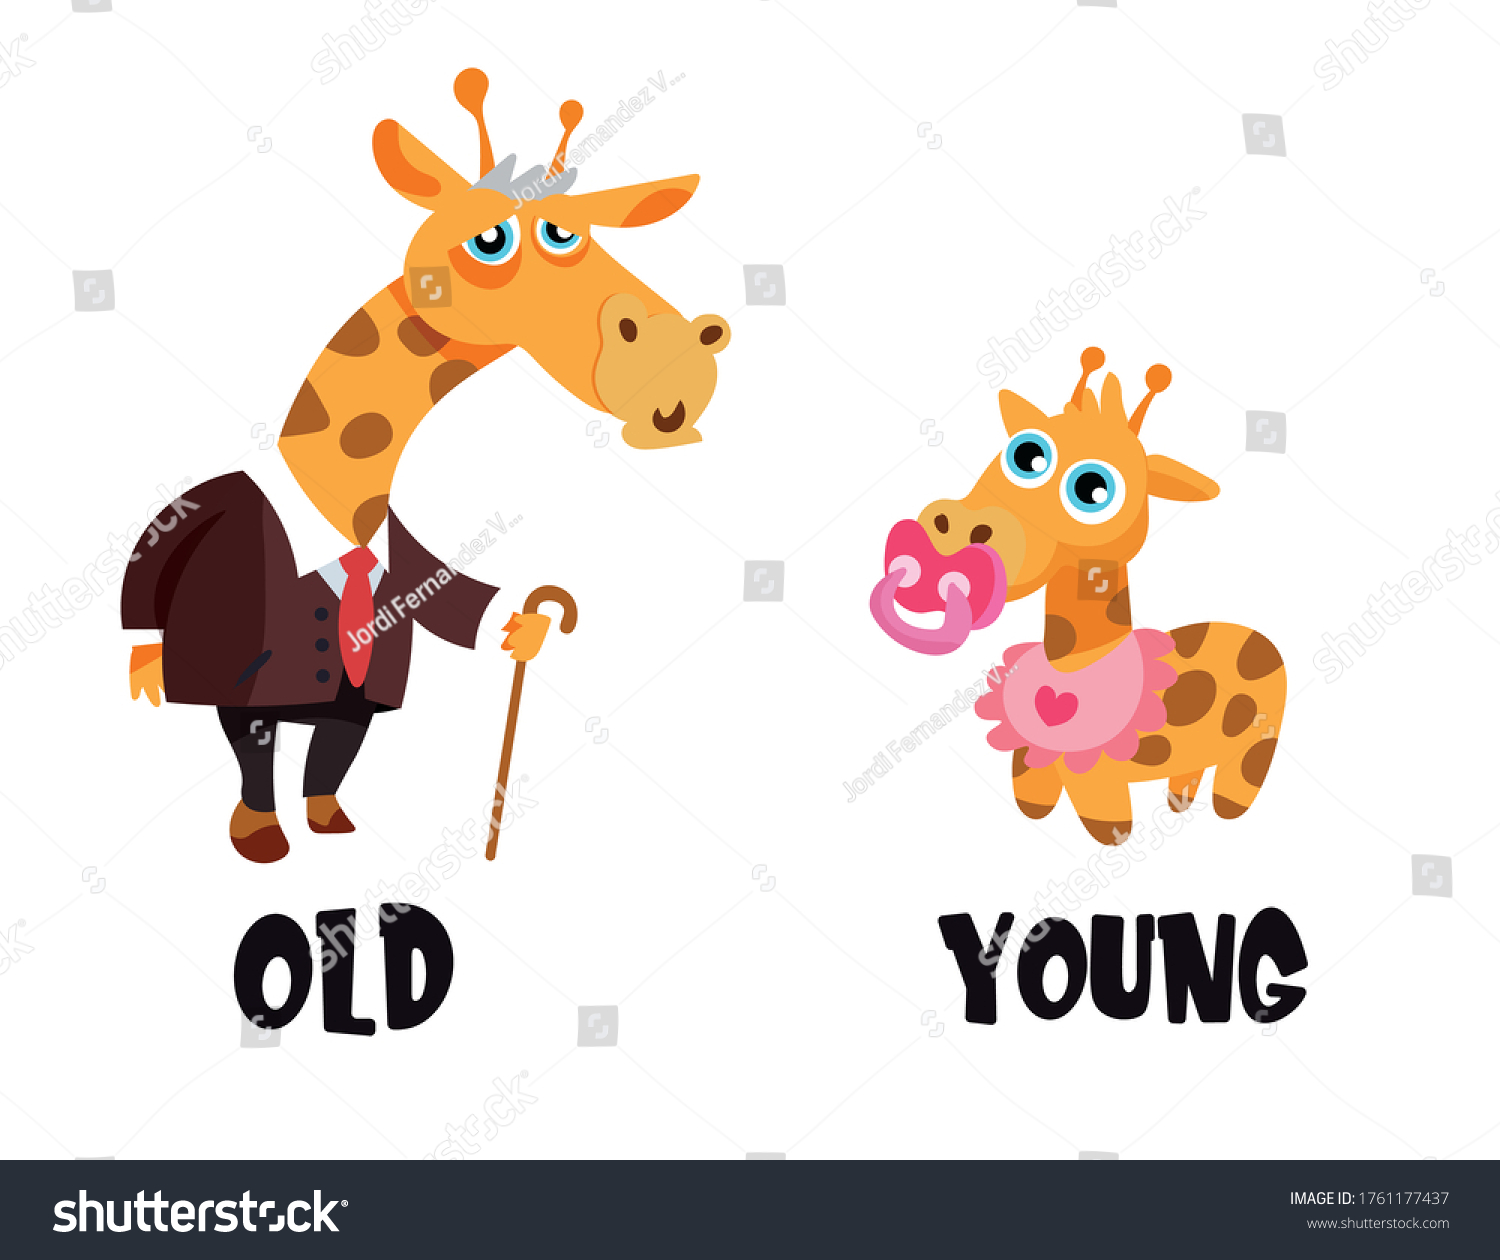 old-young-opposite-adjectives-illustration-flash-vetor-stock-livre-de-direitos-1761177437